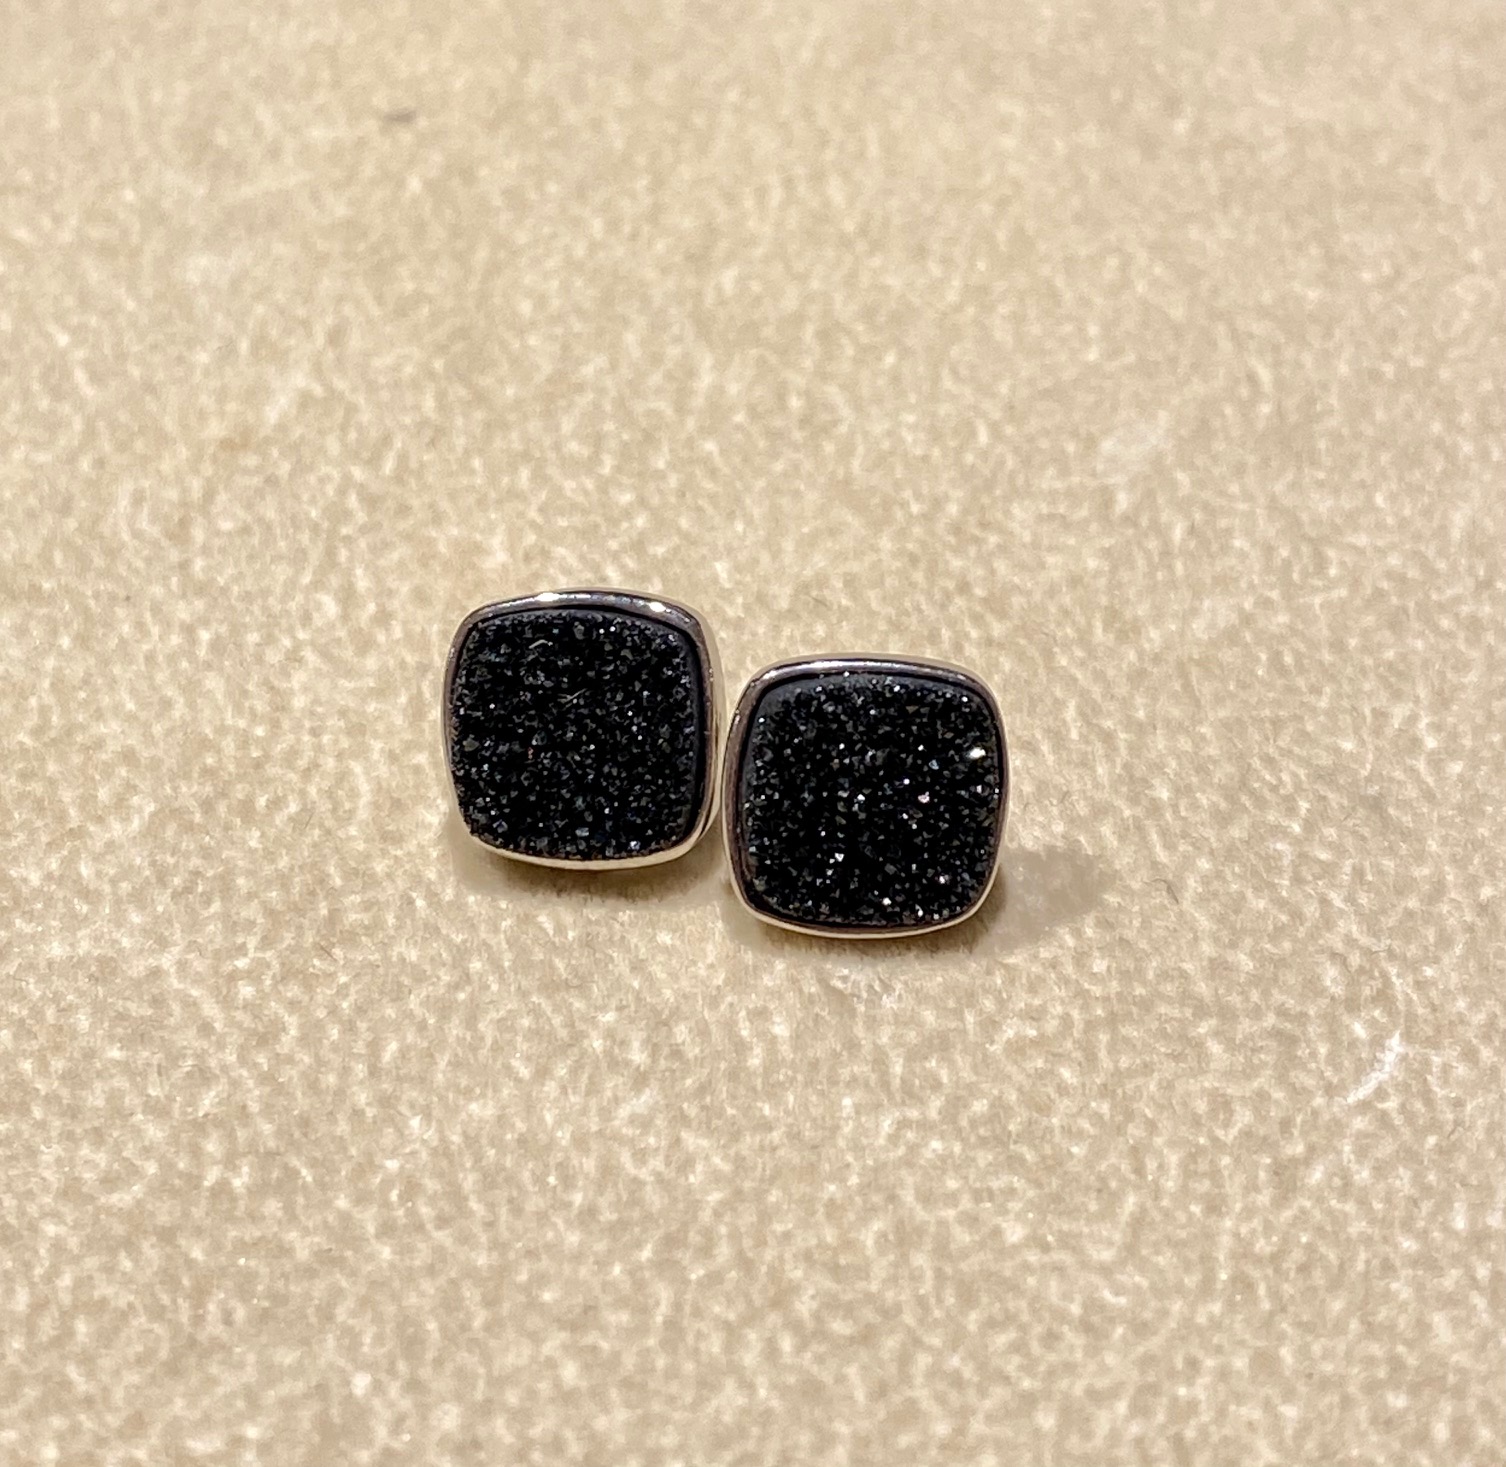 Black Druzy Squares set in Silver Earrings, 10mm